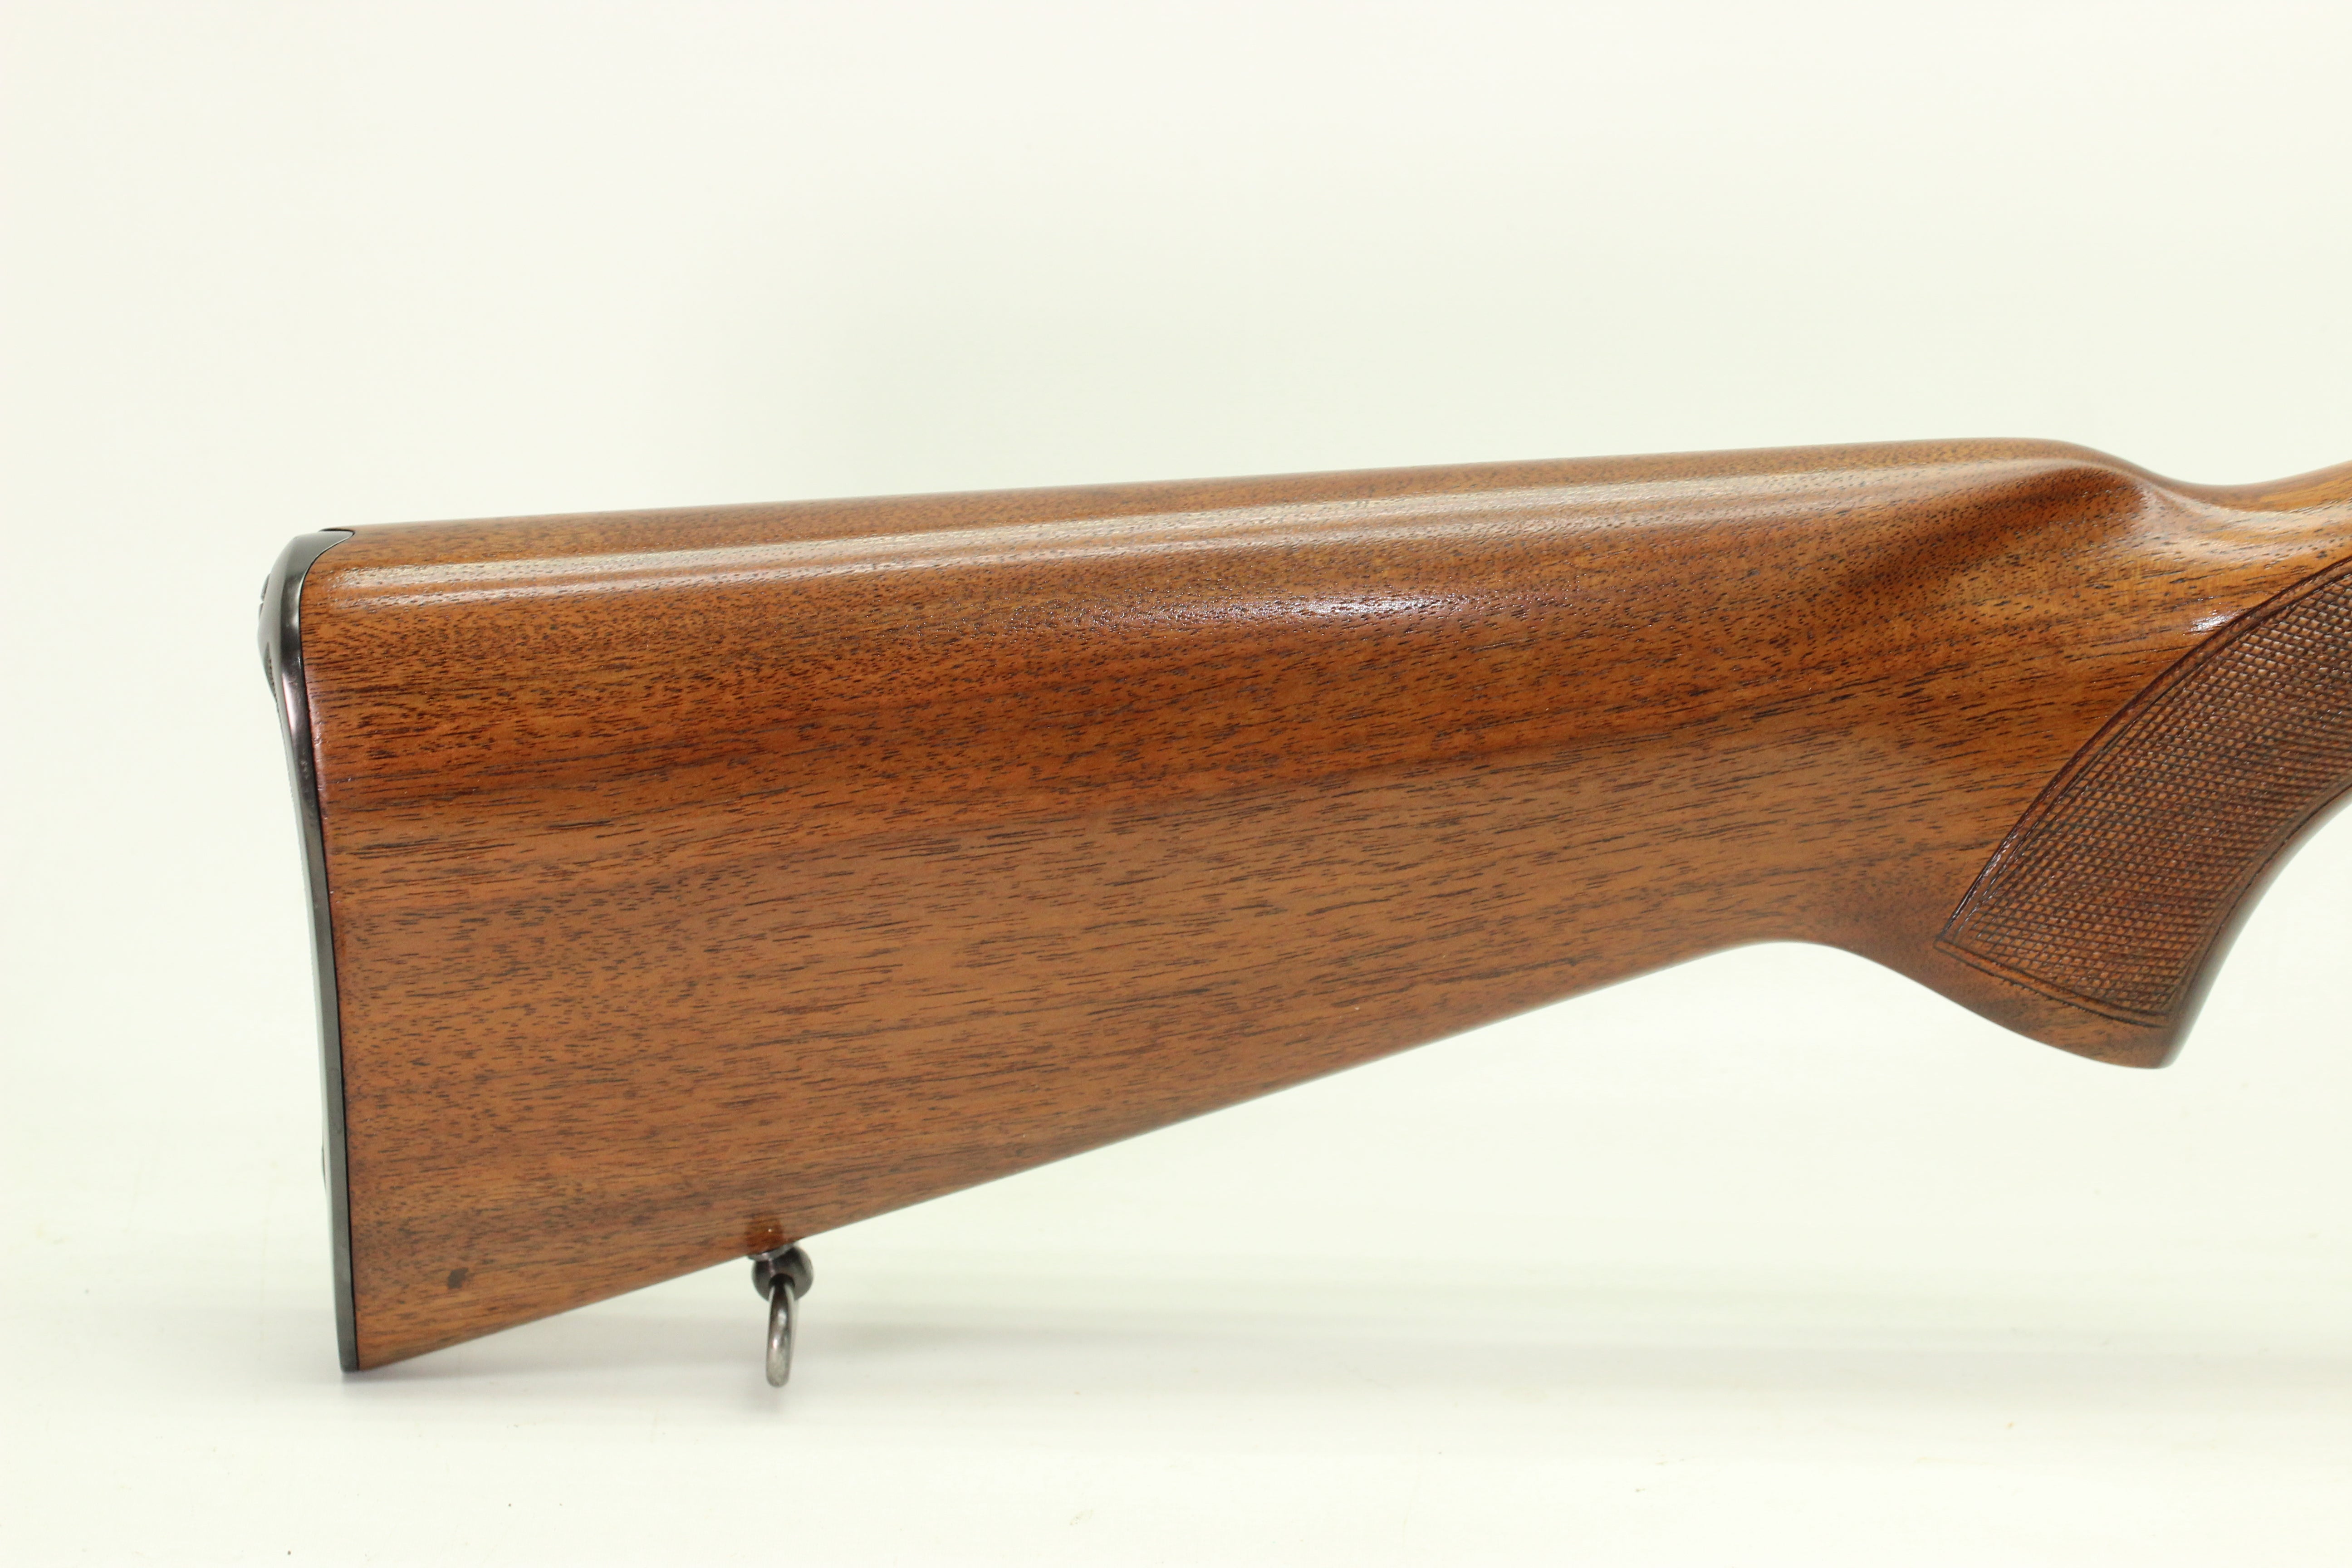 .30-06 Standard Rifle - 1955